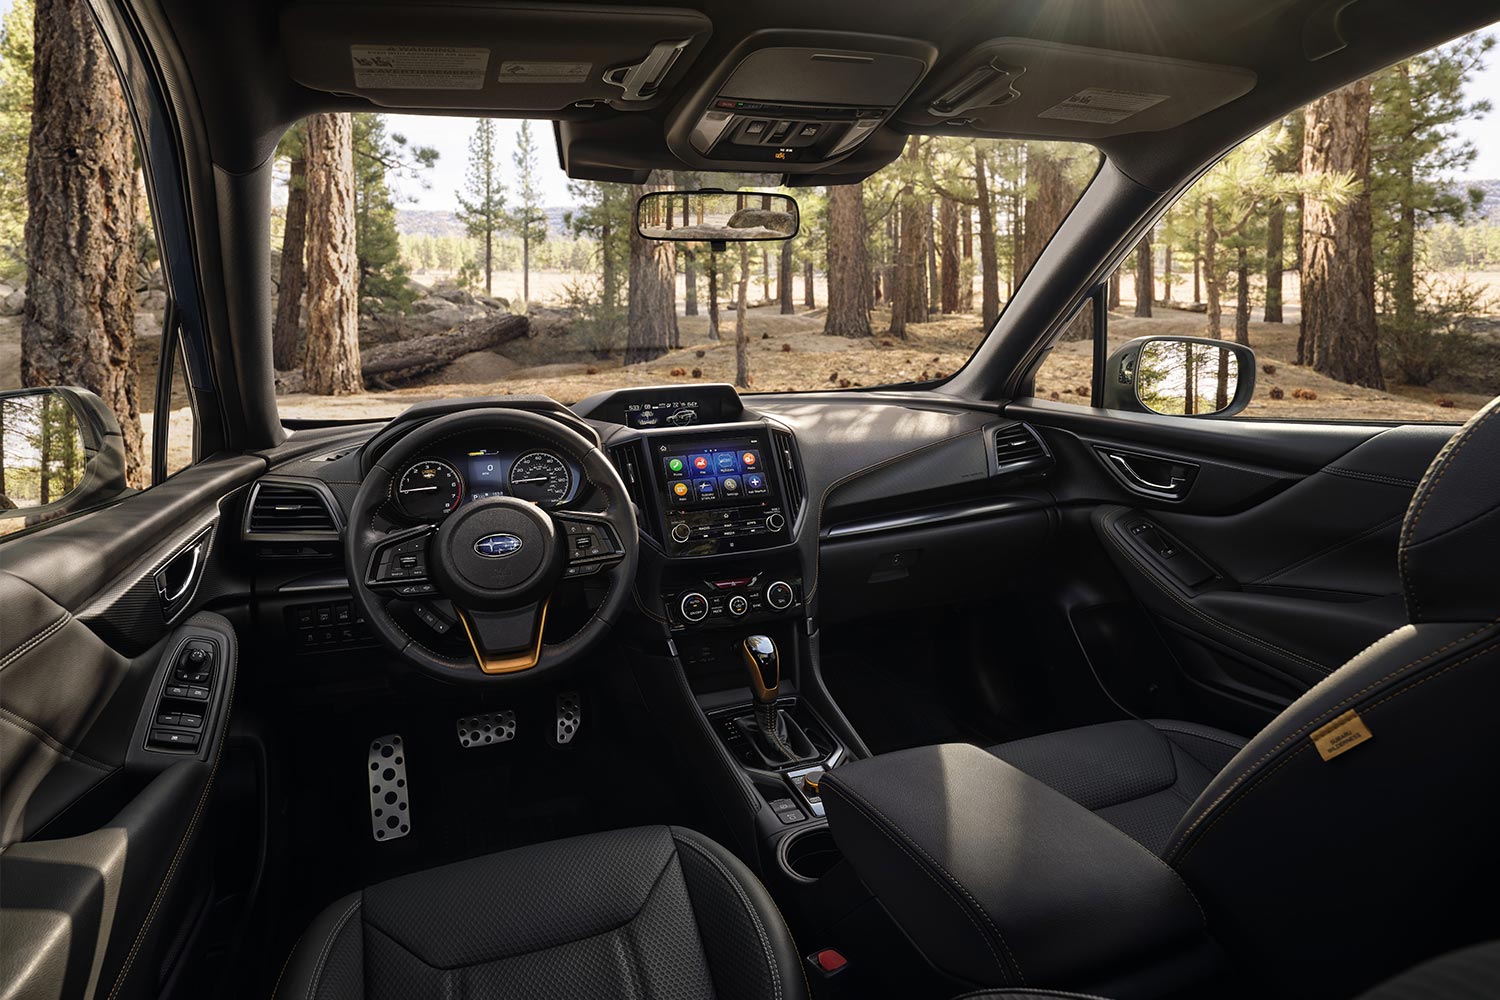 The Subaru Forester Wilderness interior